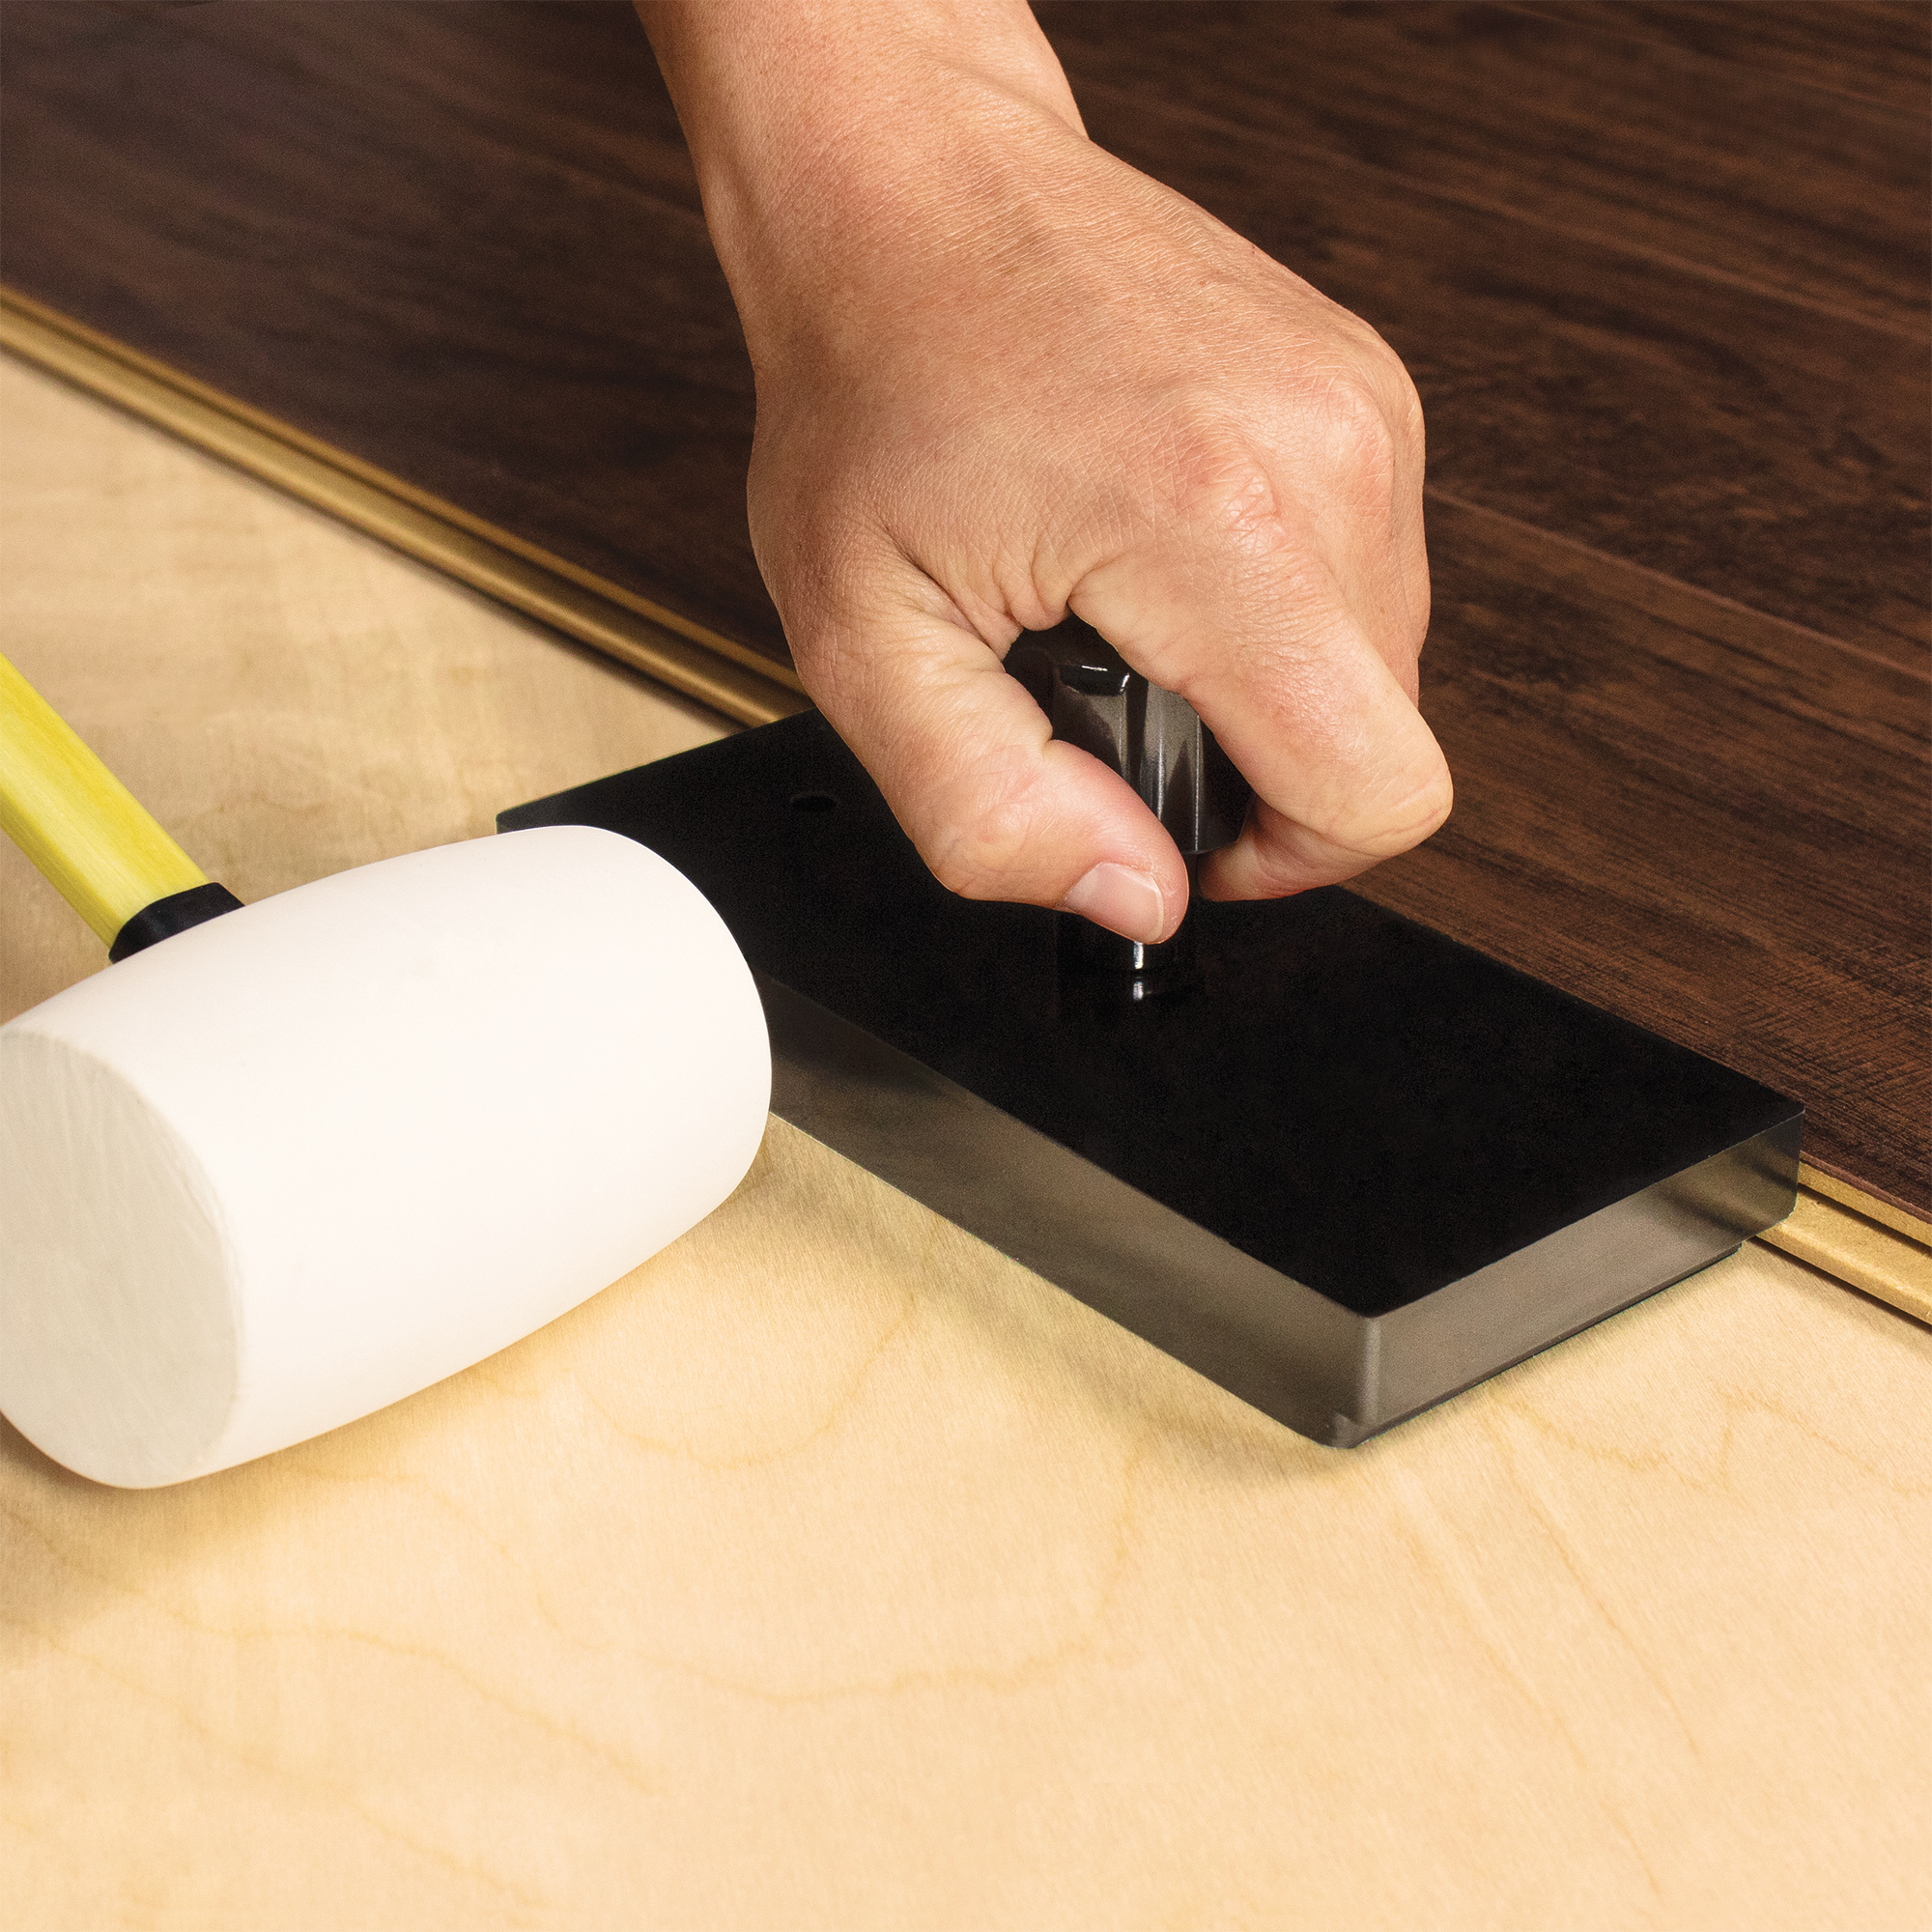 Wood Laminate Vinyl Tools Roberts, Tapping Tool For Laminate Flooring